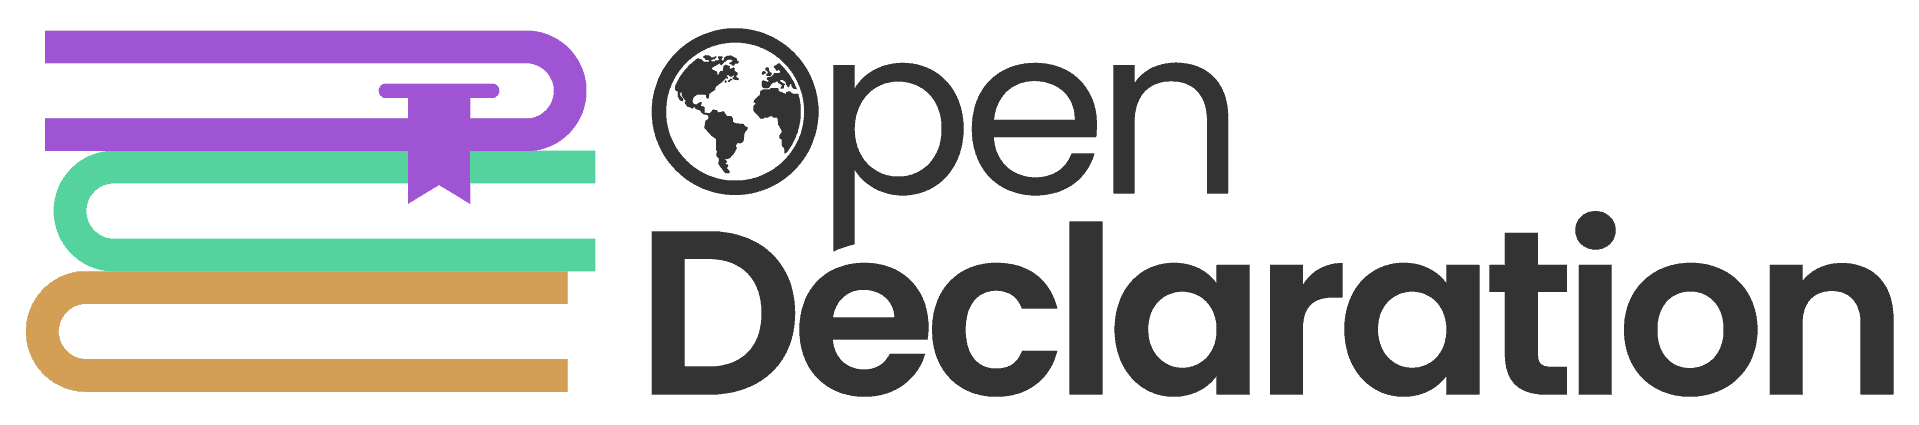 Open Declaration Brand